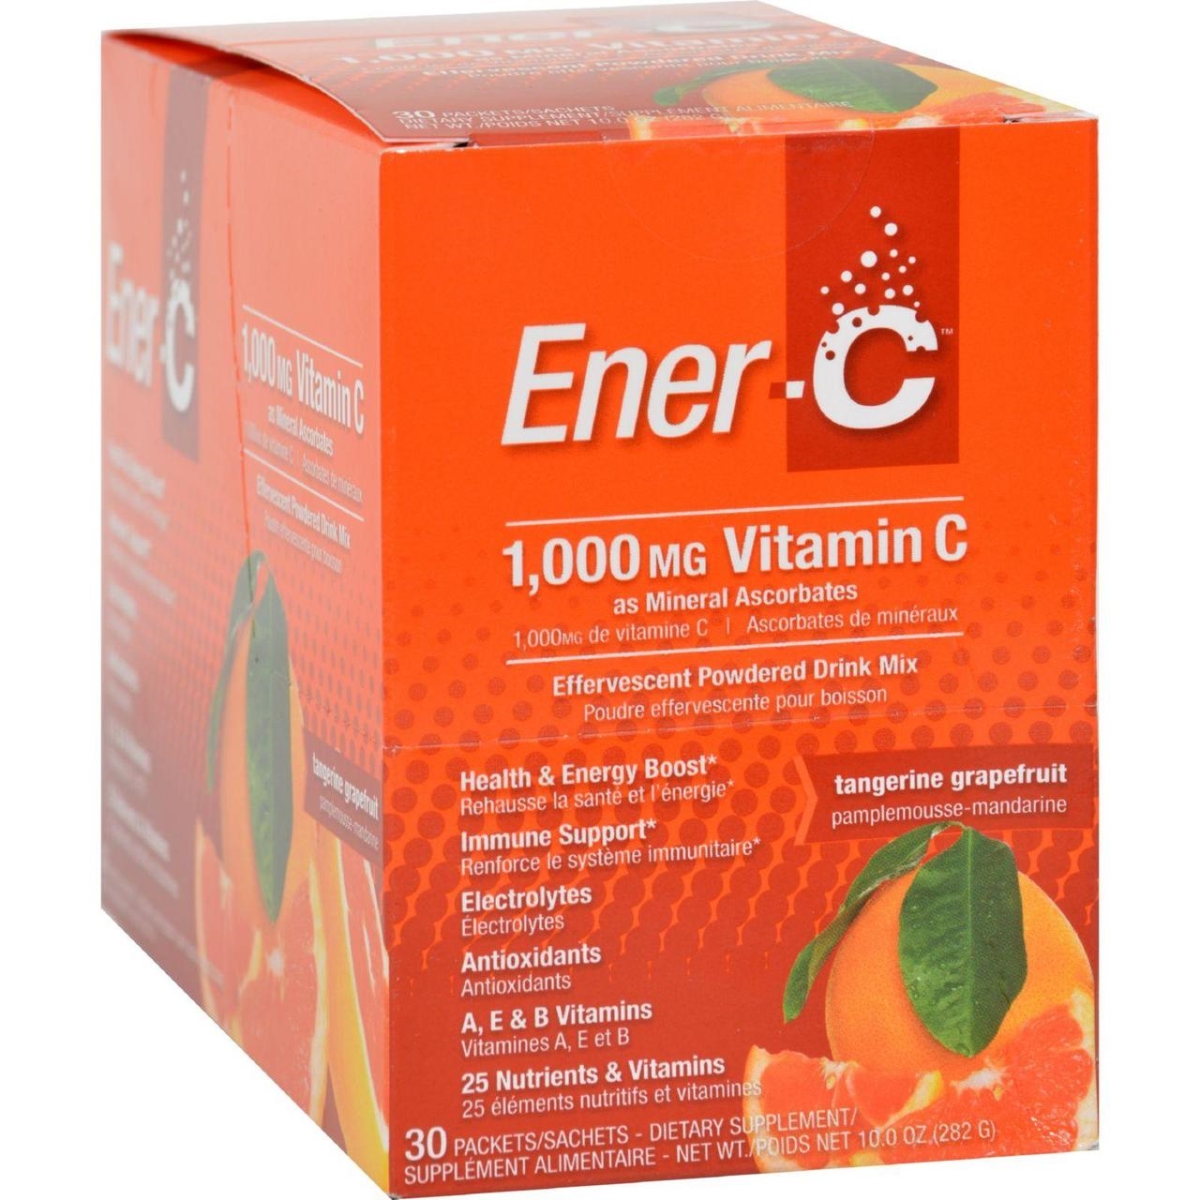 Hg1275239 1000 Mg Vitamin Drink Mix - Tangerine Grapefruit, 30 Packet